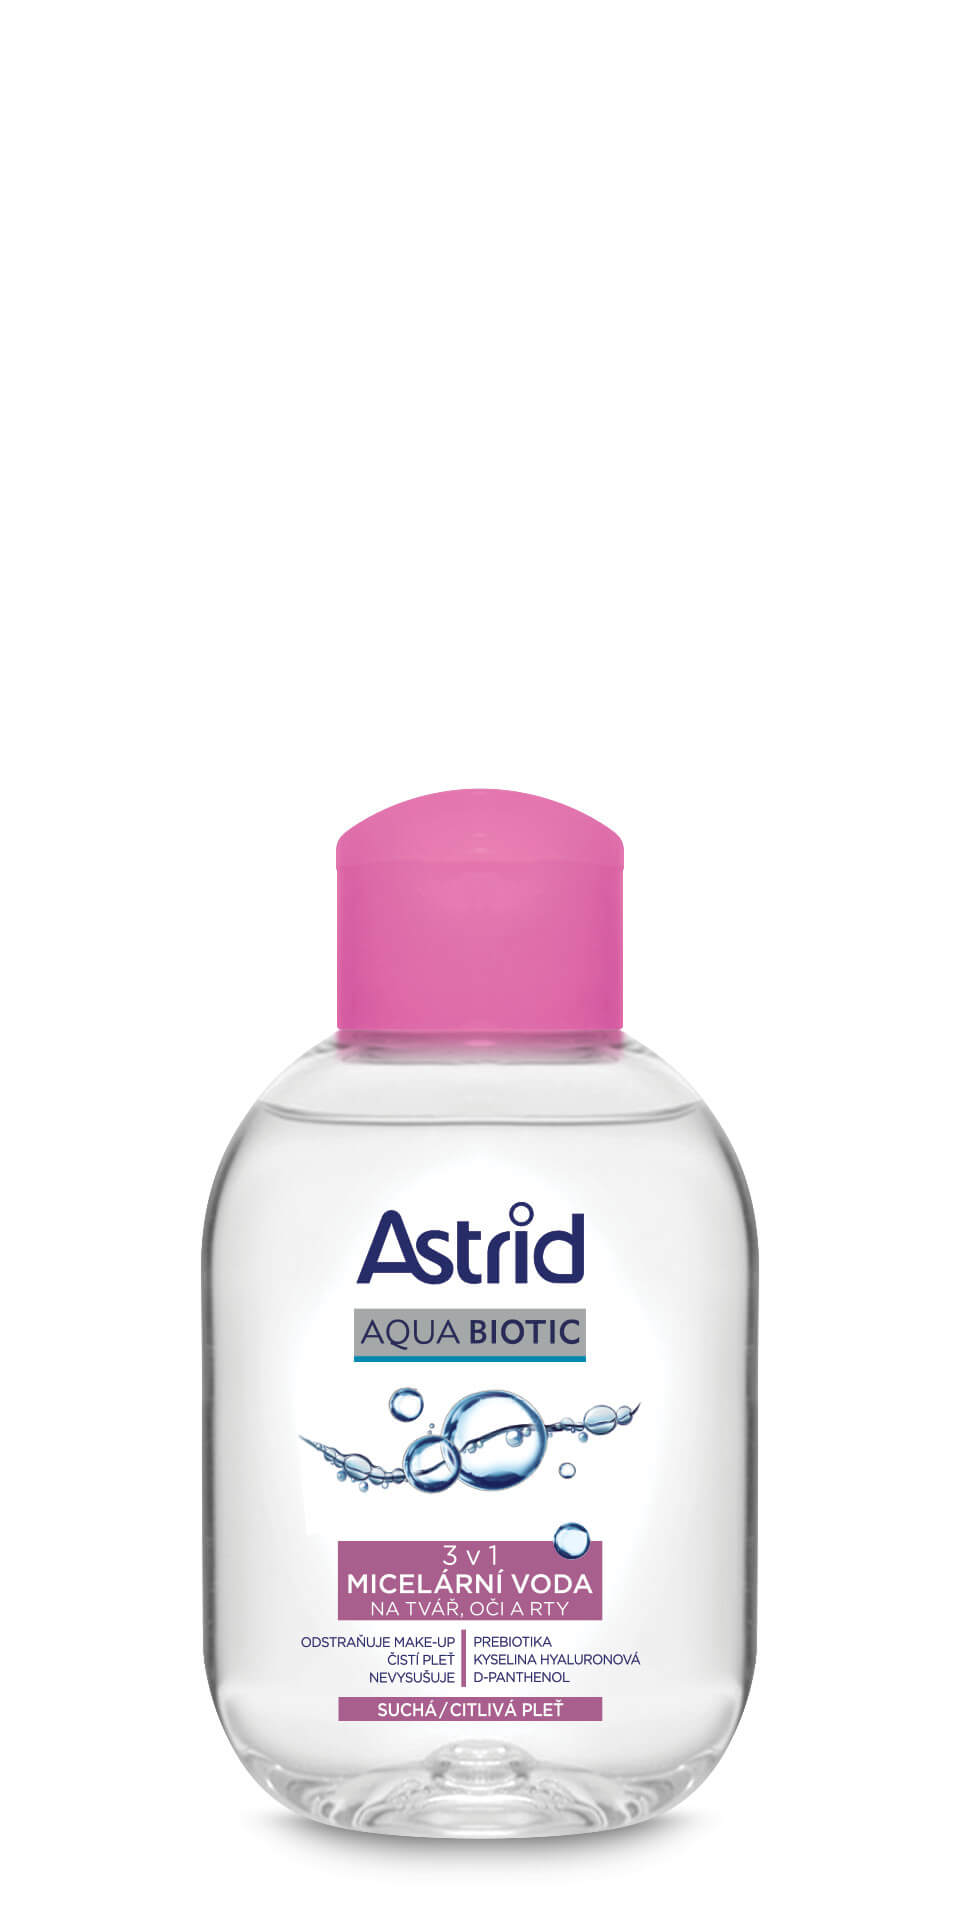 Astrid Micelární voda 3v1 pro suchou a citlivou pleť Aqua Biotic 100 ml